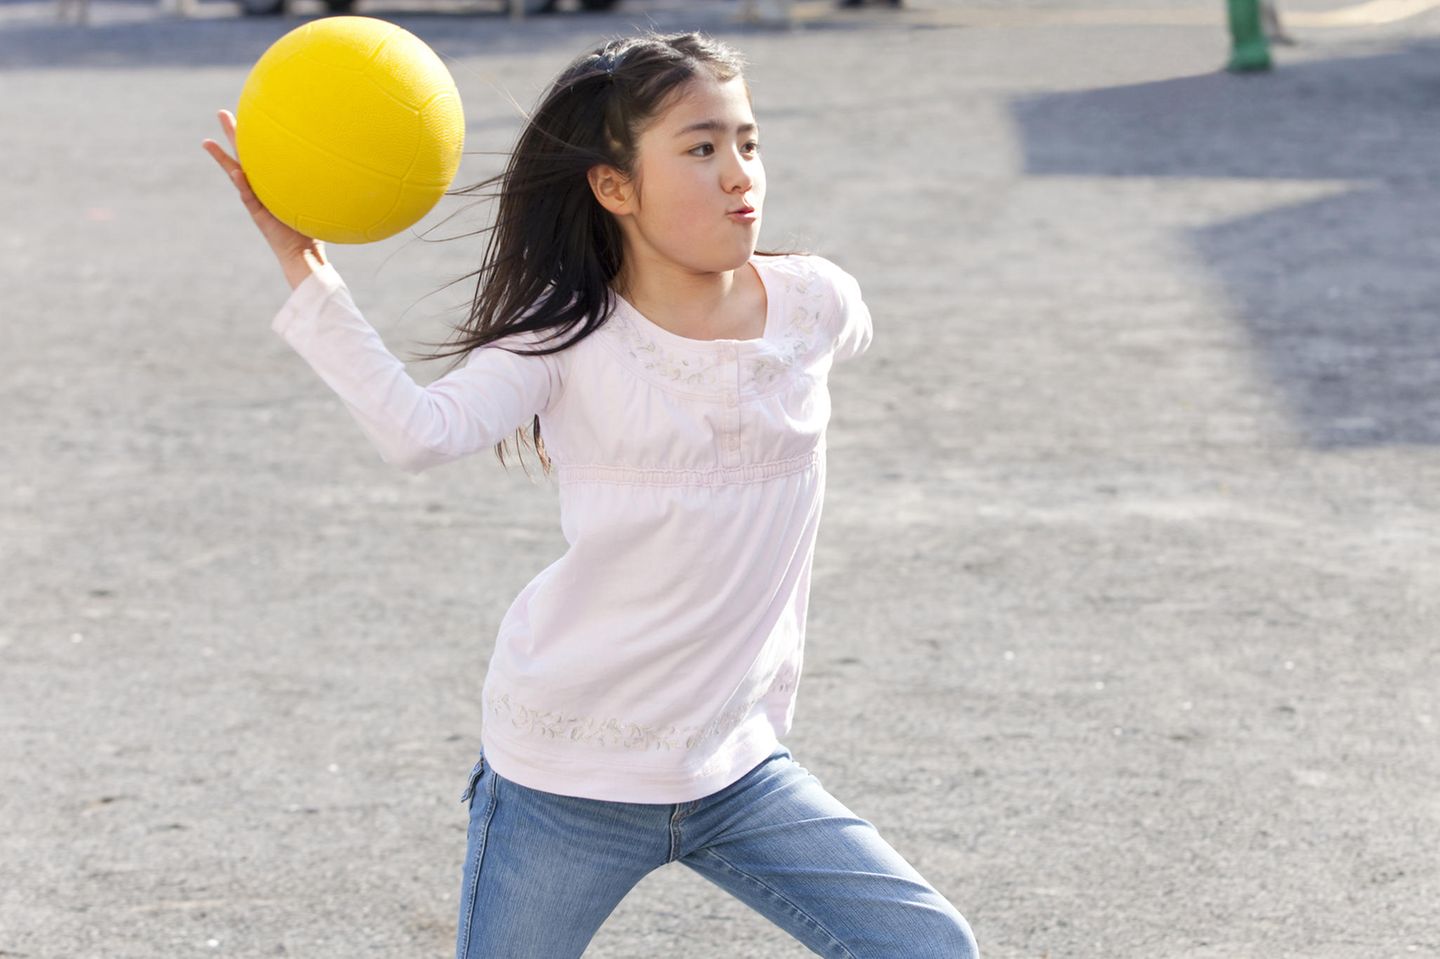 Völkerball: Dunkelhaariges Mädchen wirft gelben Ball